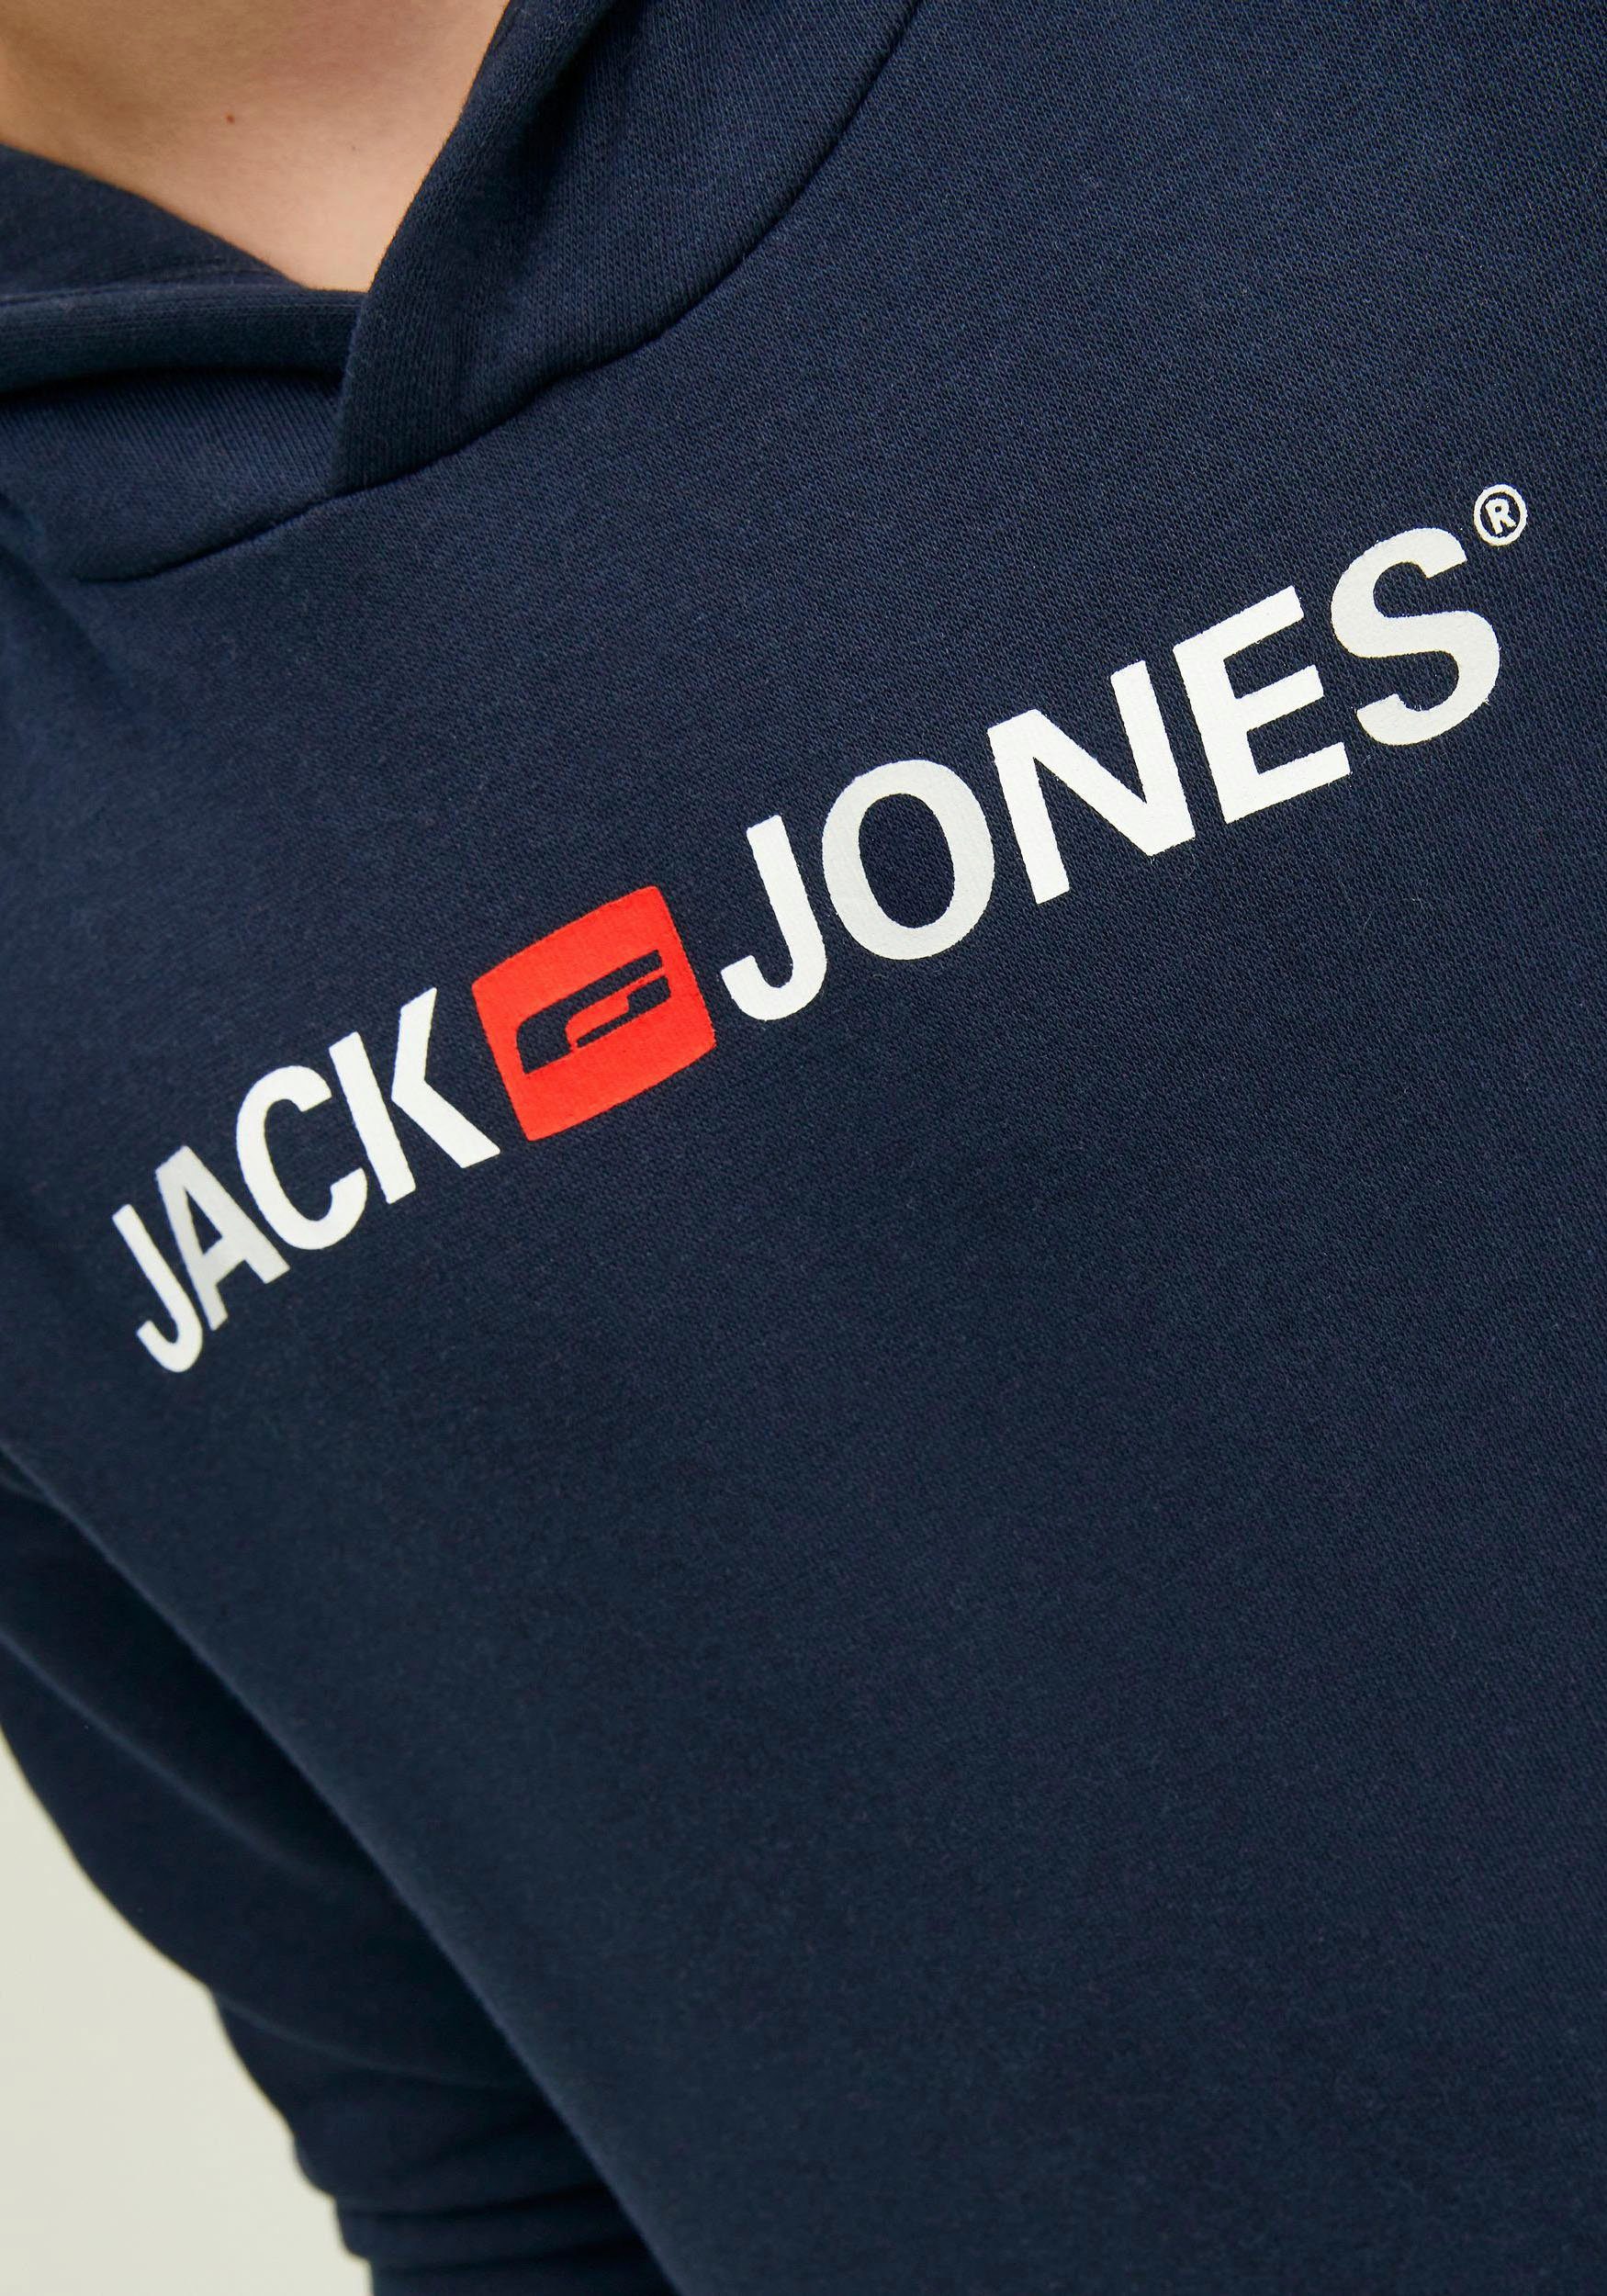 Deep Junior Jones & Kapuzensweatshirt Teal Jack